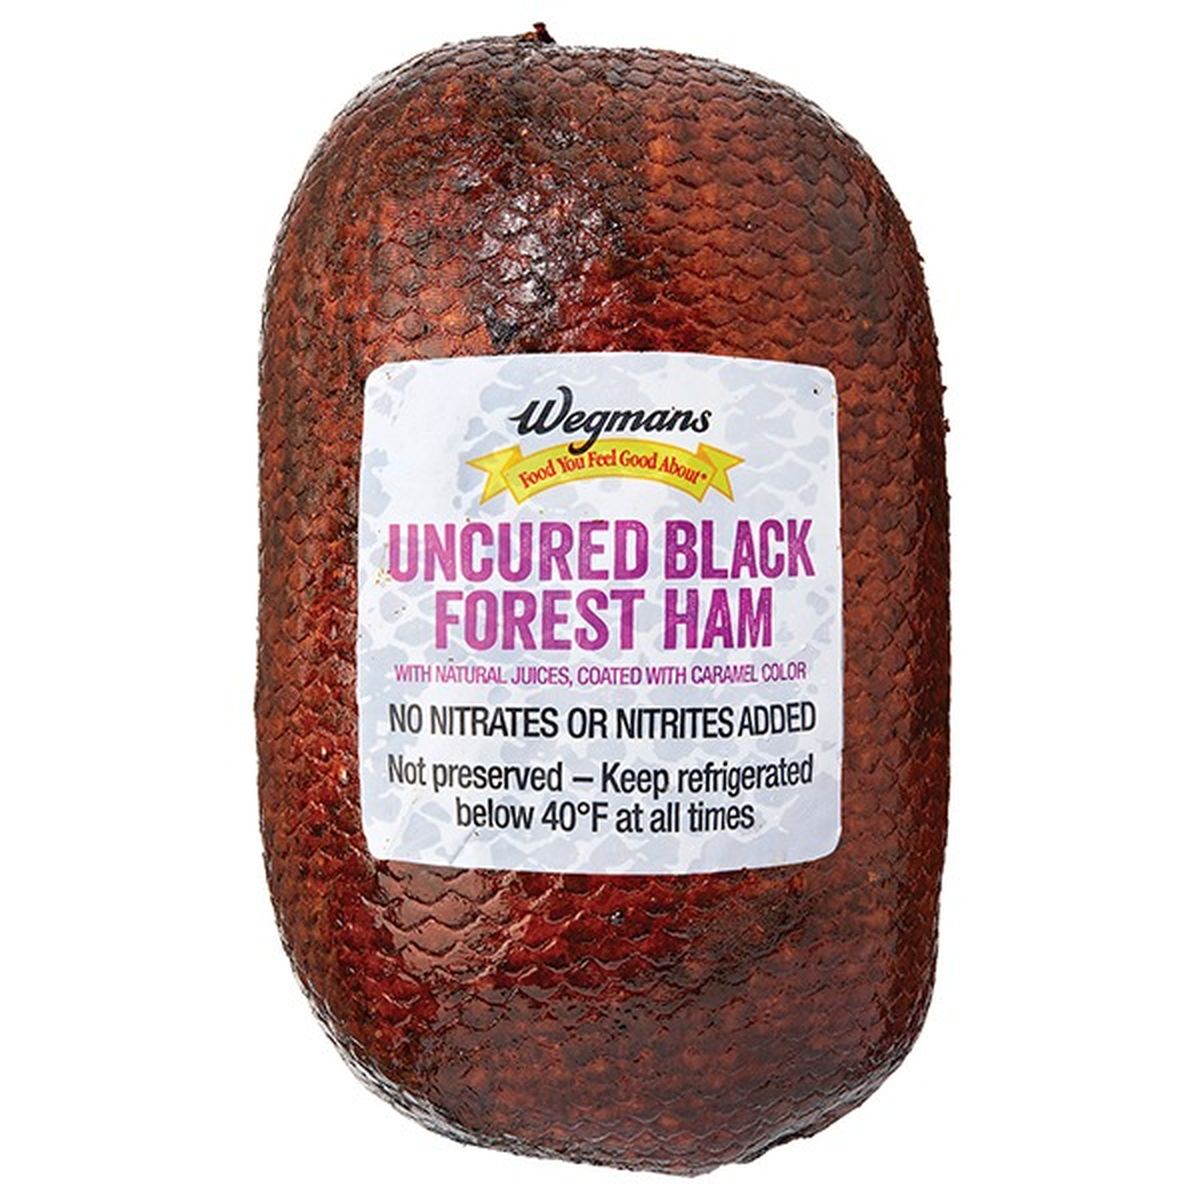 Calories in Wegmans Uncured Black Forest Ham